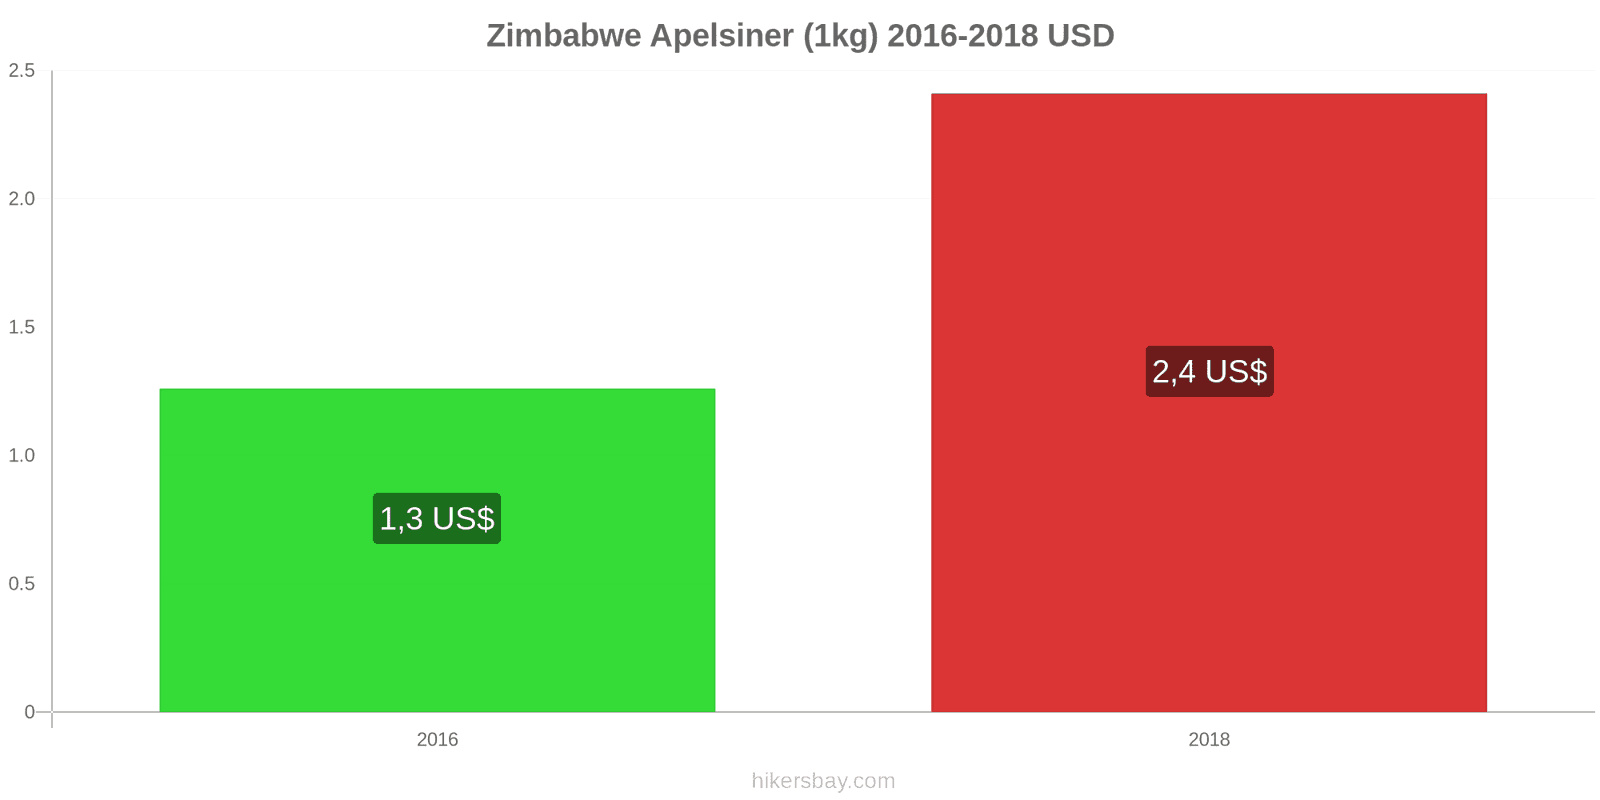 Zimbabwe prisändringar Apelsiner (1kg) hikersbay.com